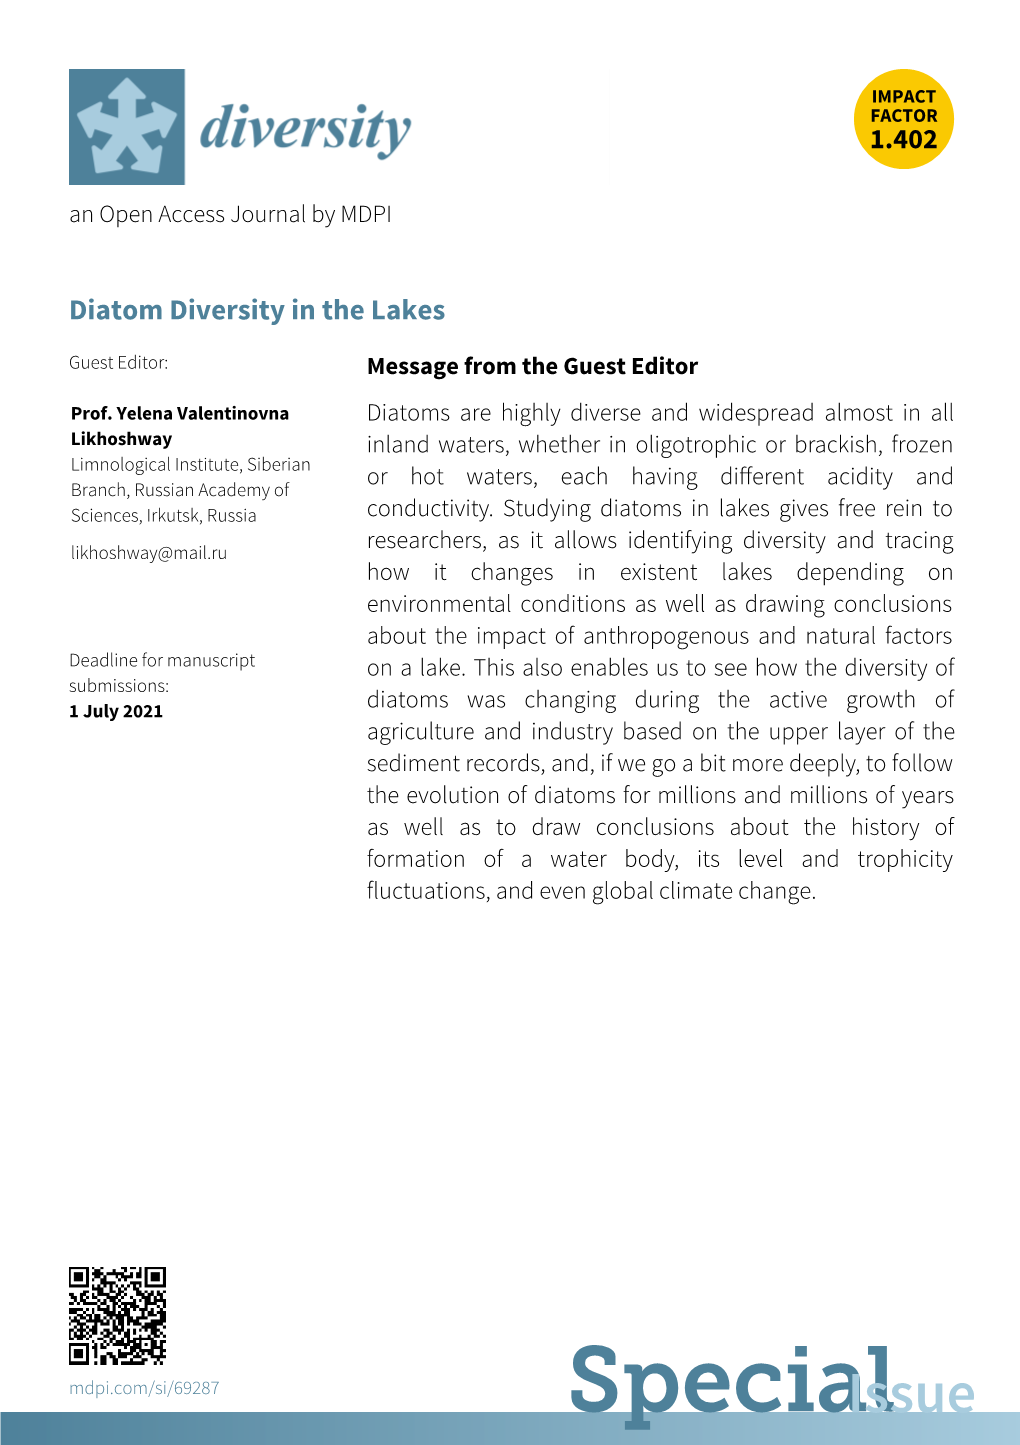 Diatom Diversity in the Lakes